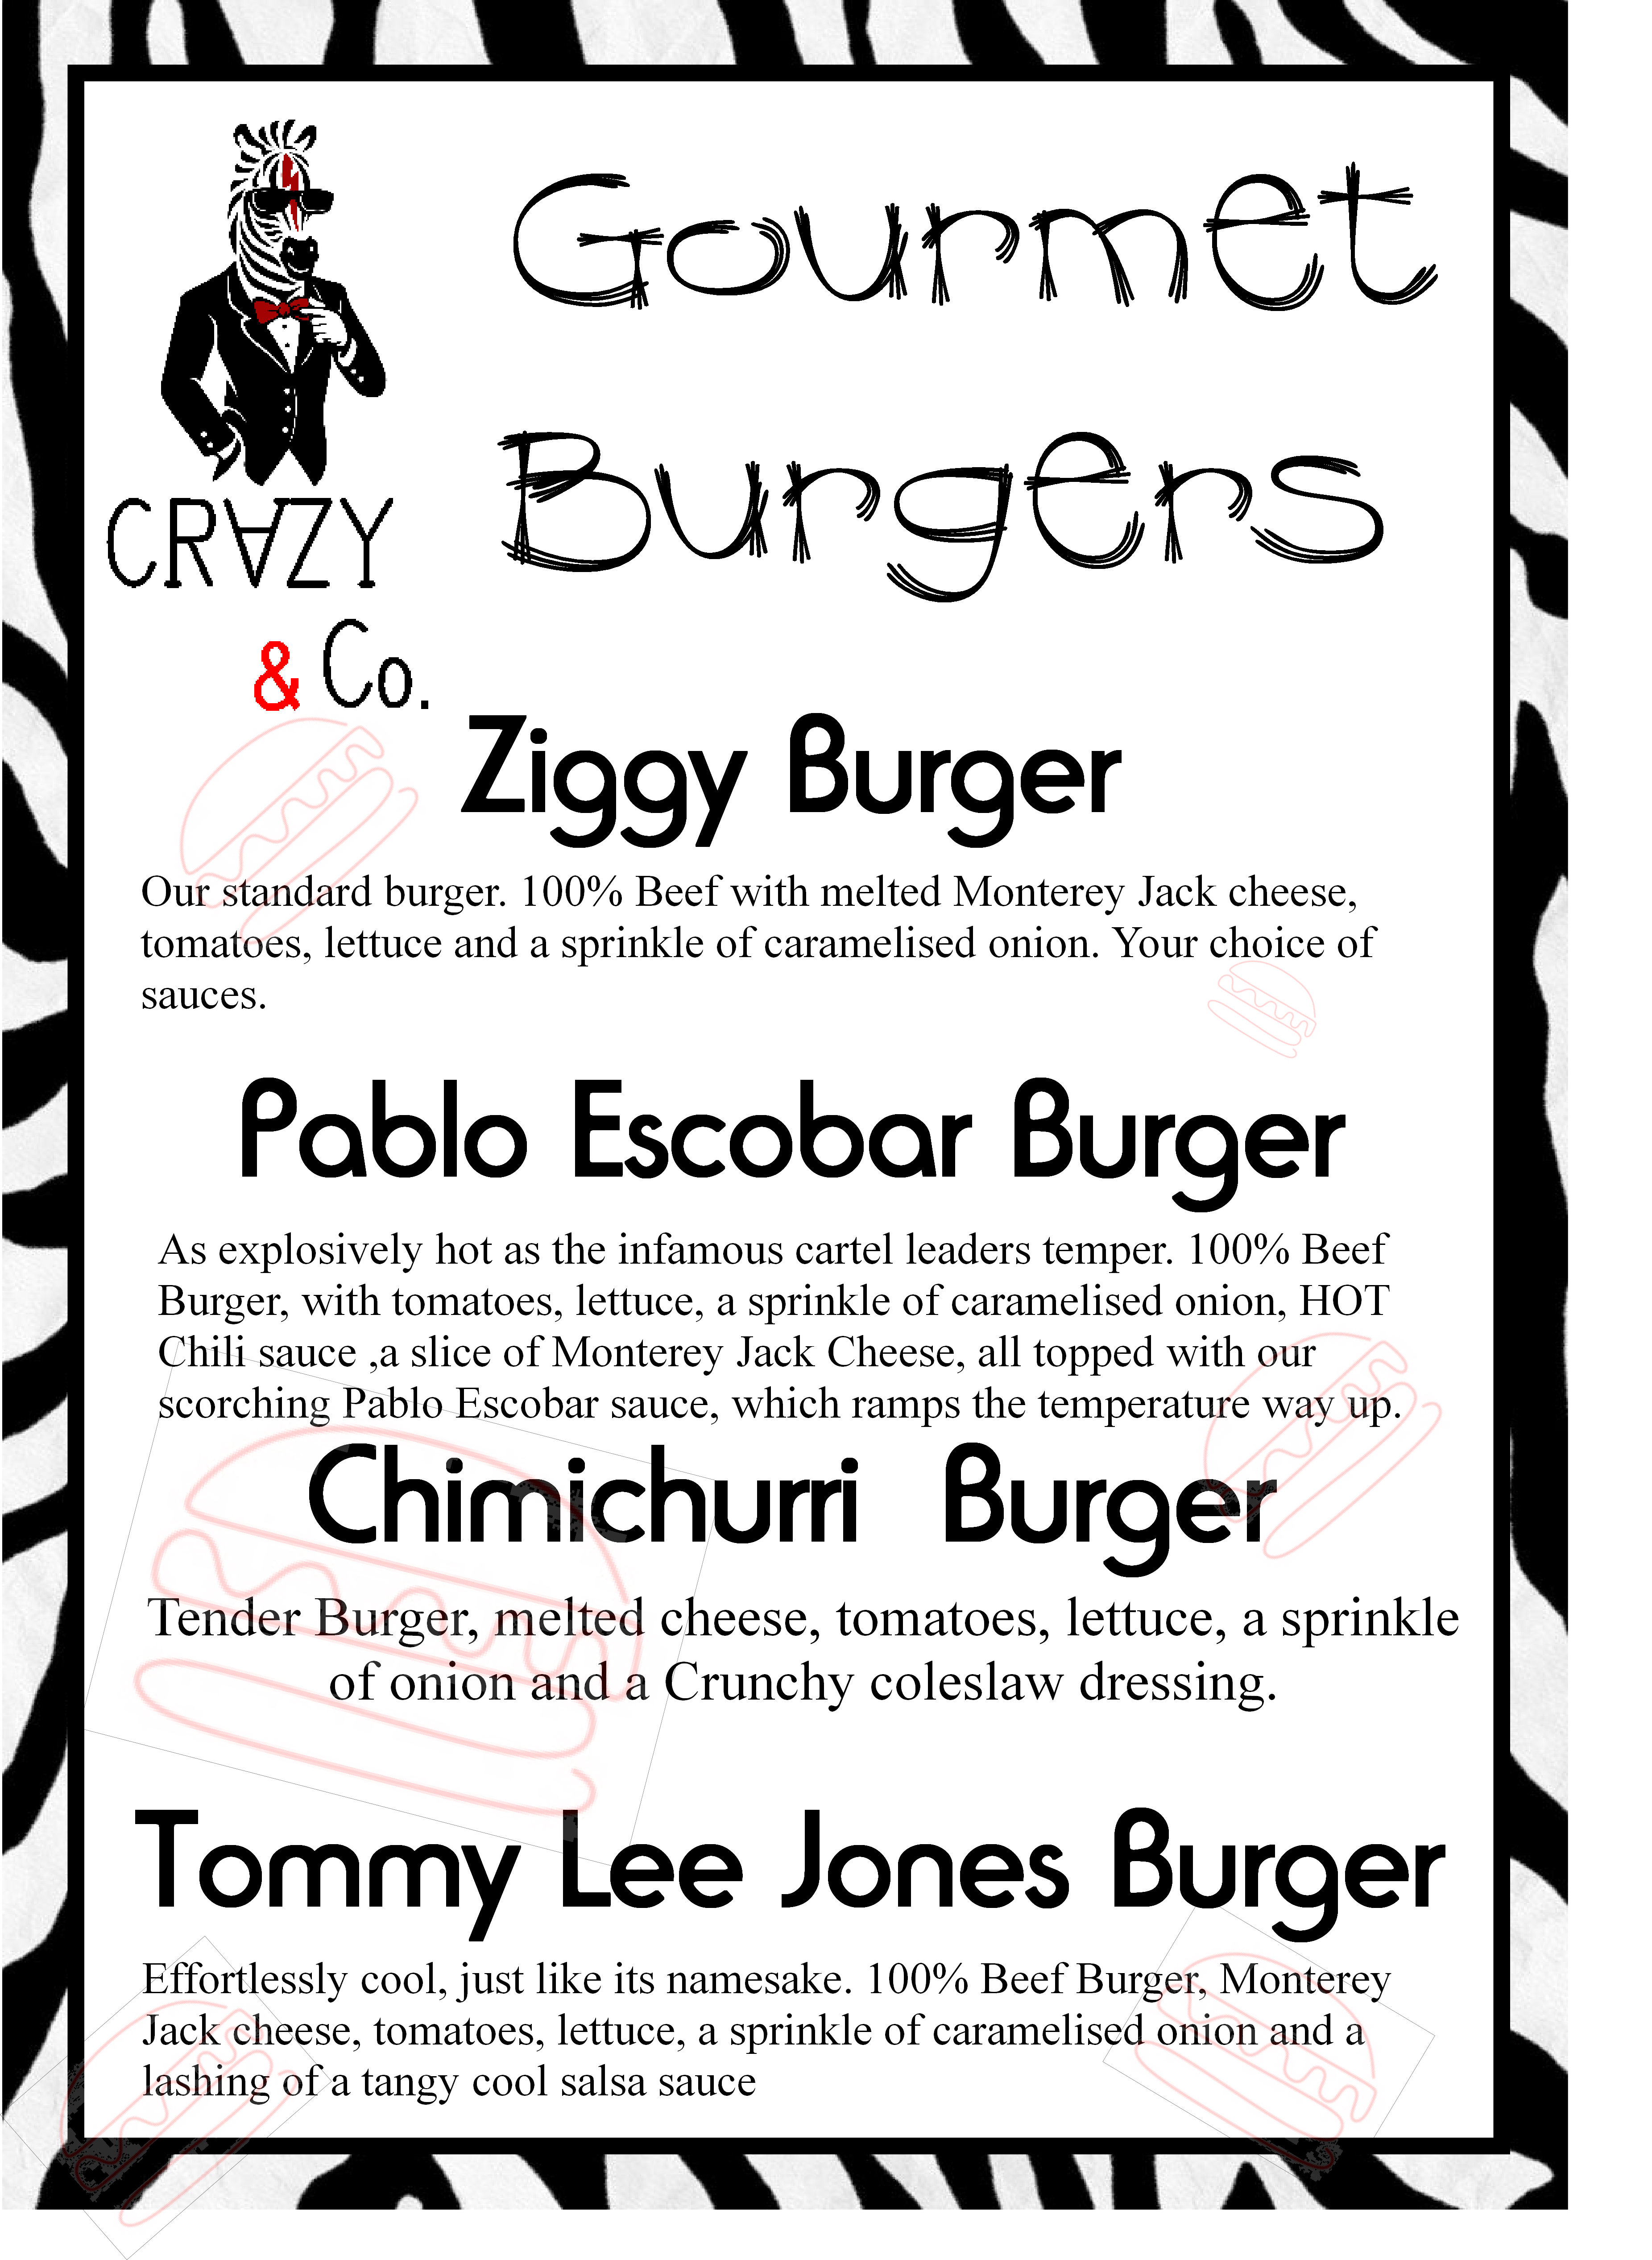 Our new gourmet burger menu.